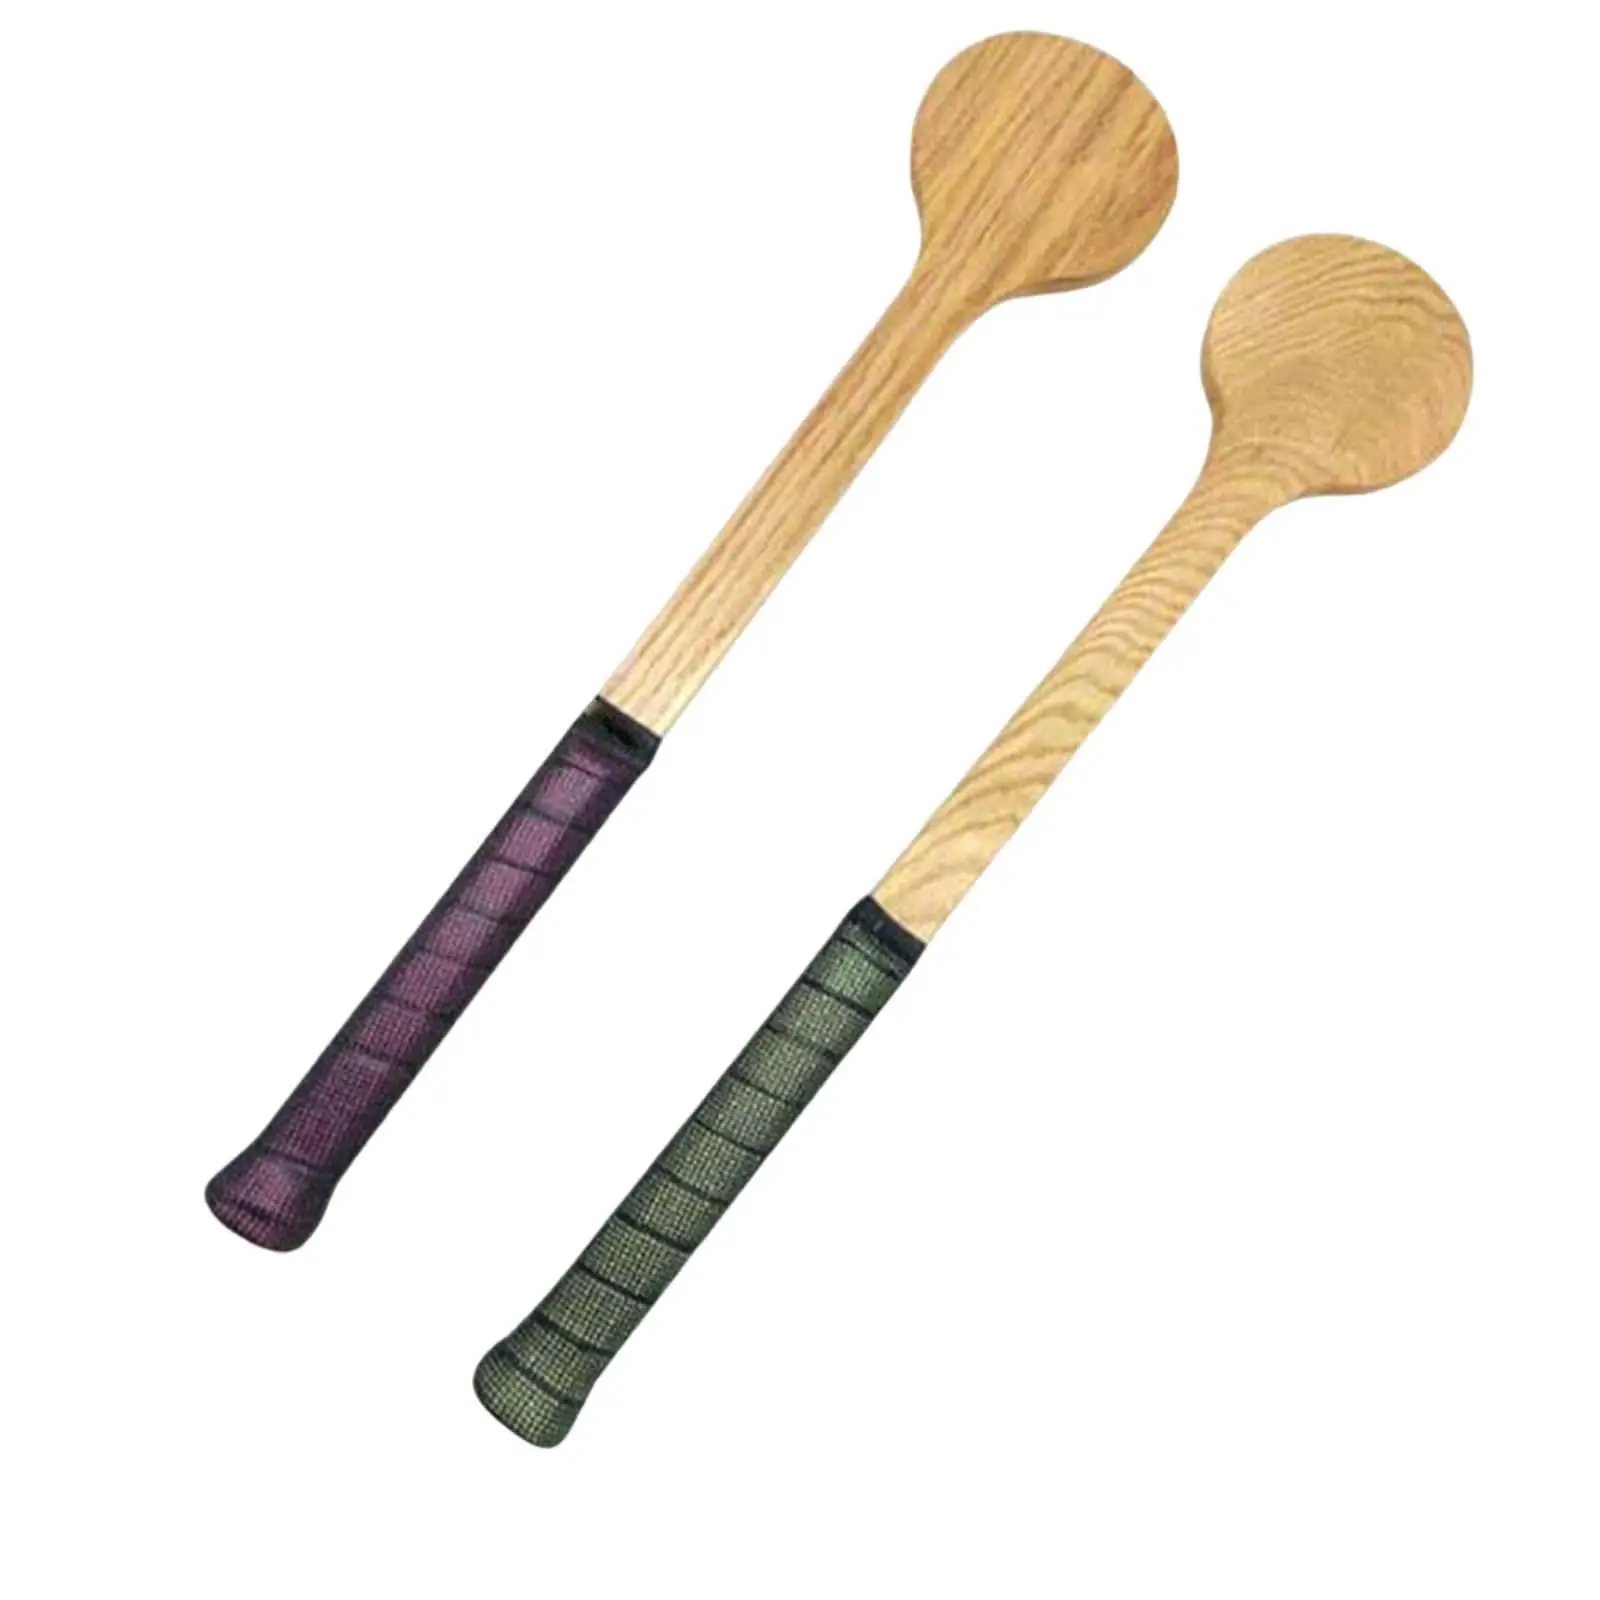 Tennis Pointer Tennis Wooden Spoon Anti-Slip  60x12cm Sweet  350 Grams Tennis Sweet Pointer Spoon for Accurately Hit Beginner